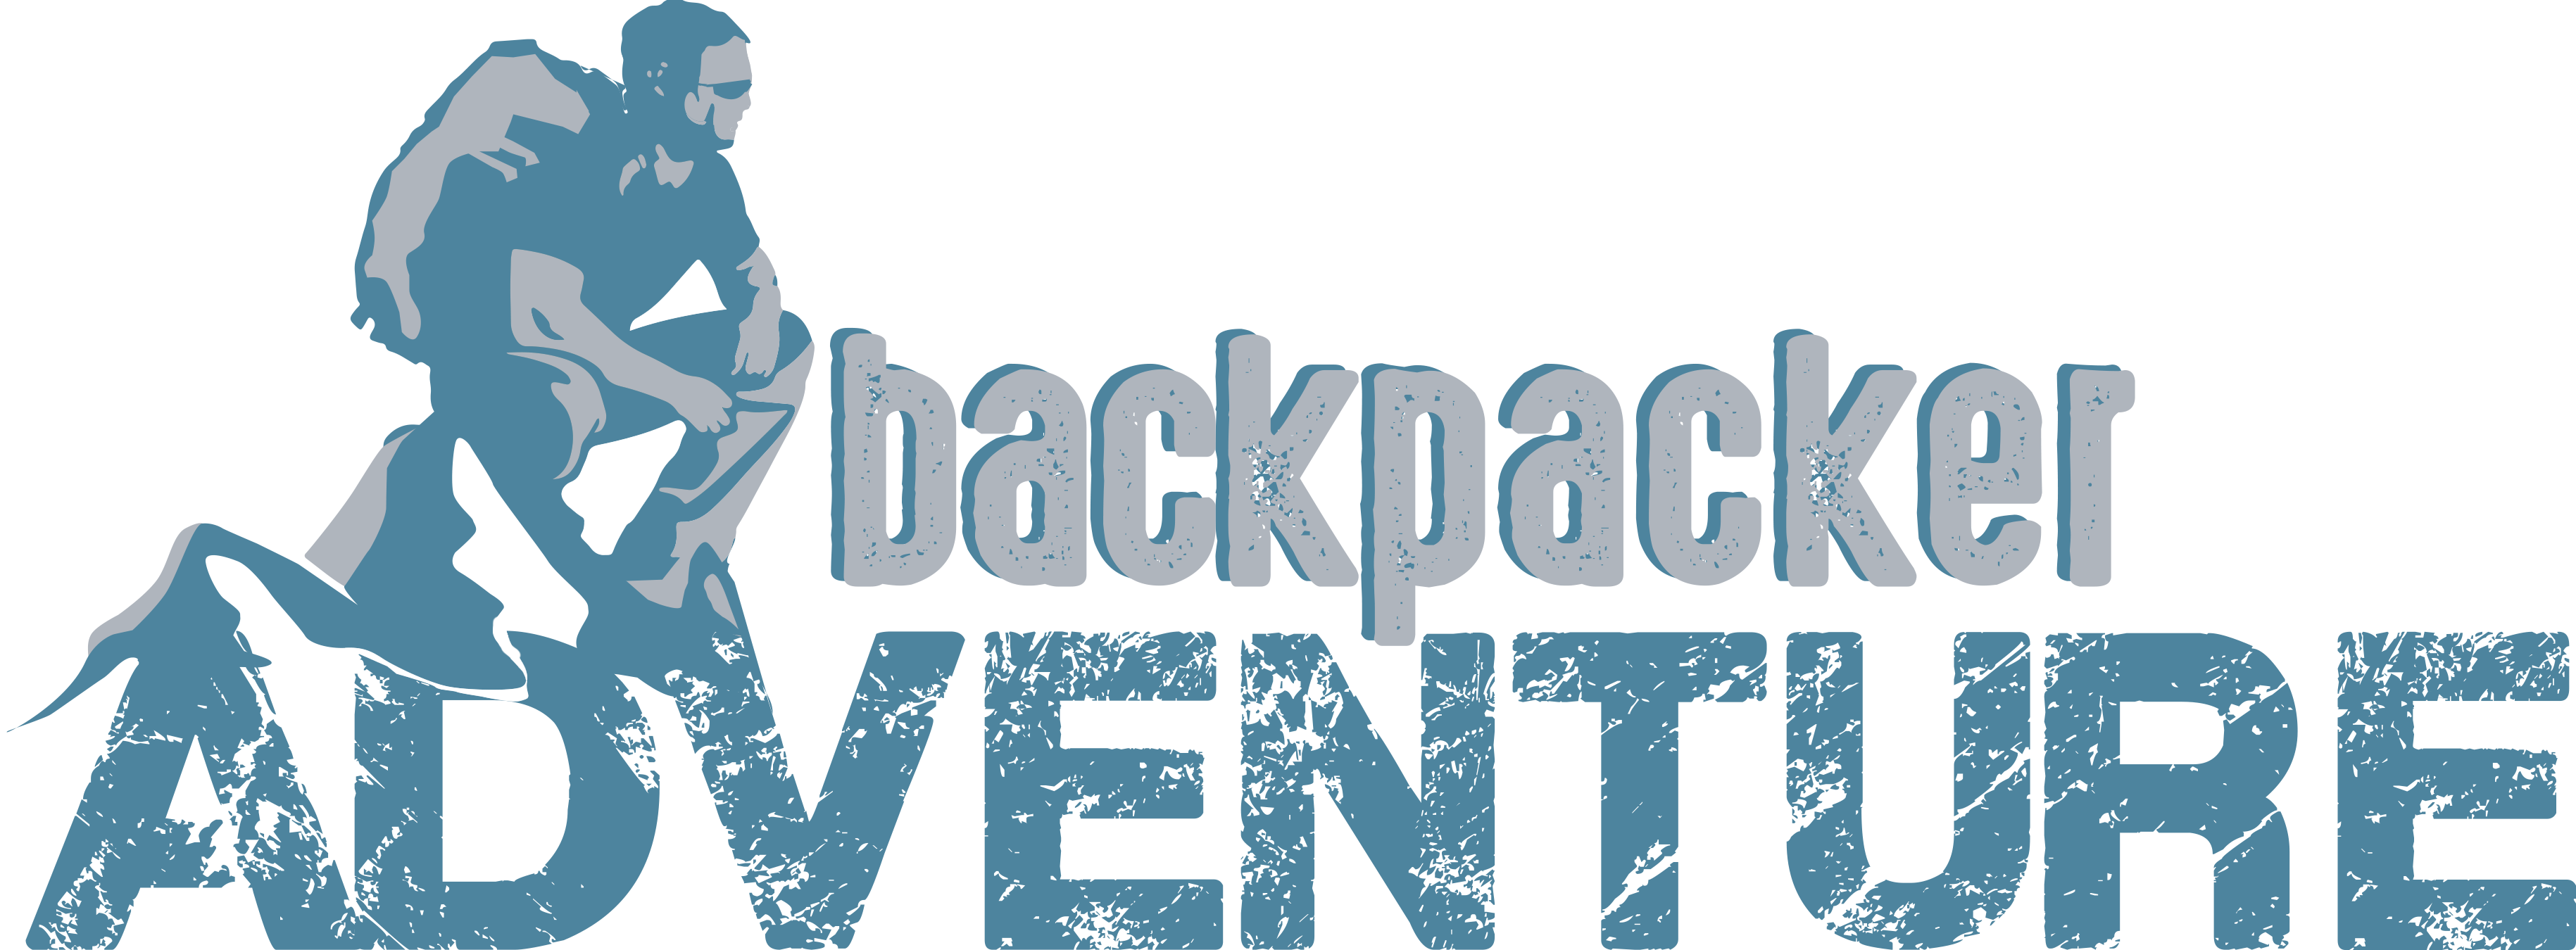 Weekend Tuscia Experience | Backpacker Adventure